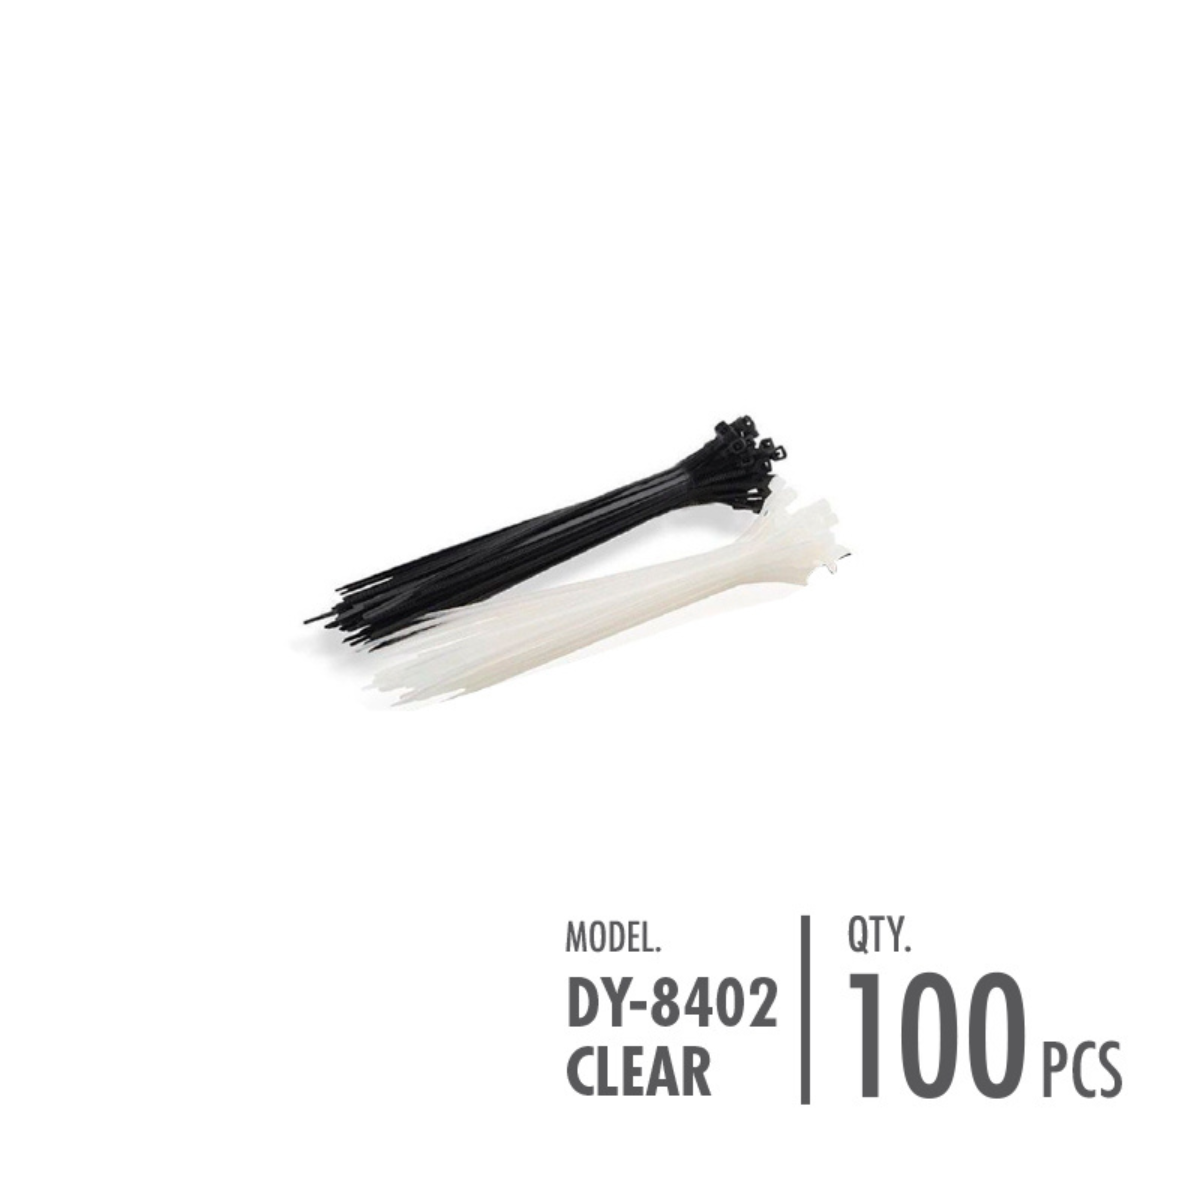 Cable Tie - Clear (Dim: 0.36 x 15cm)